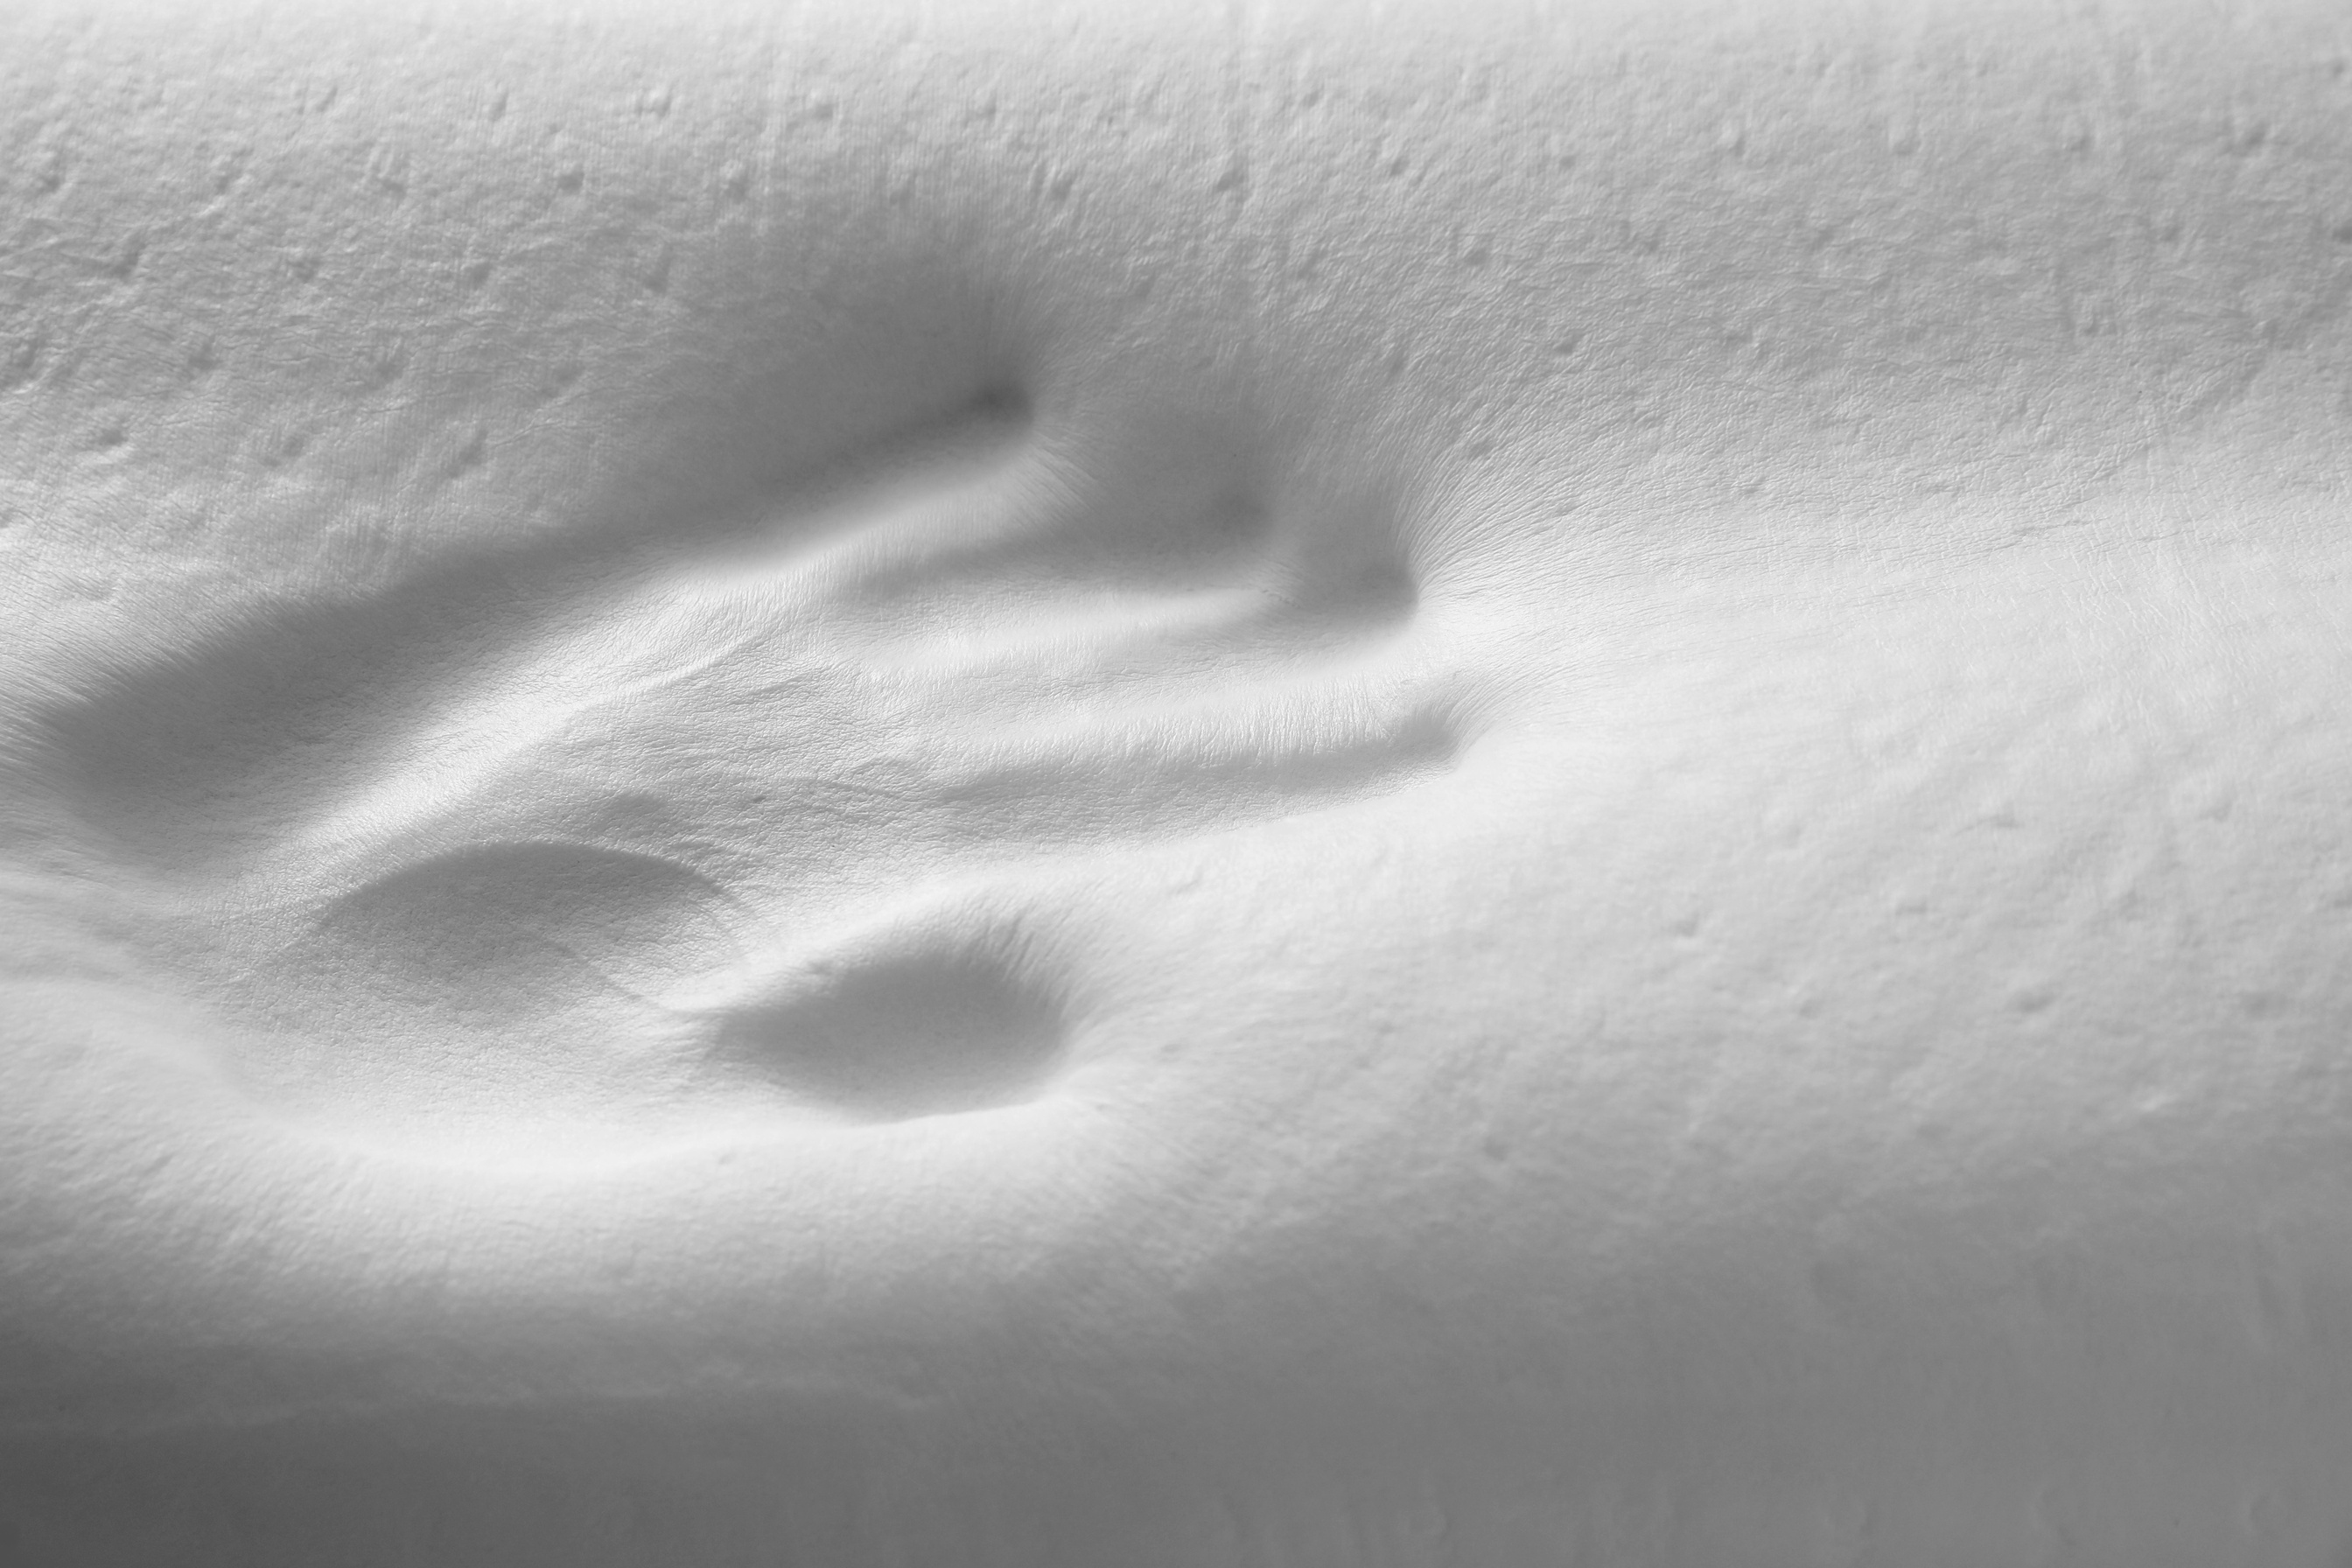 Handprint on White Memory Foam Pillow, Closeup